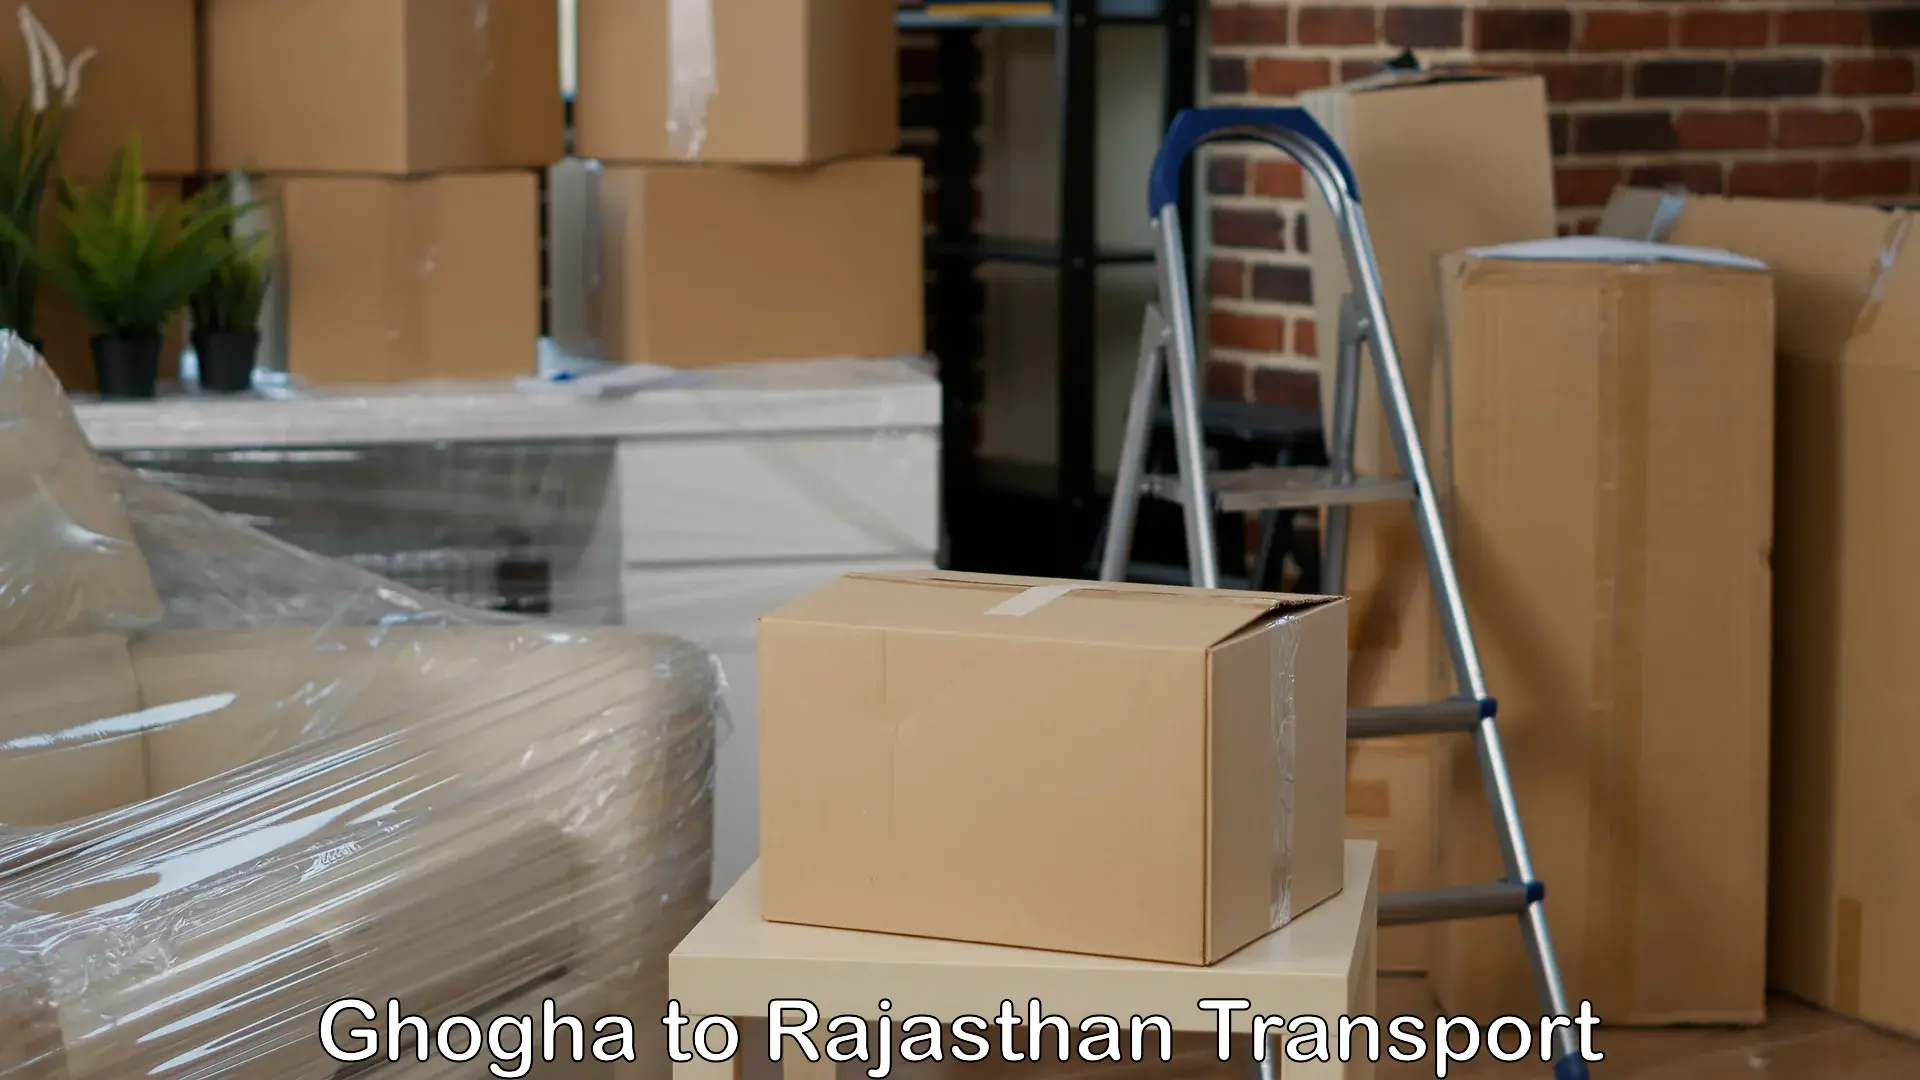 Shipping partner Ghogha to Jaisalmer